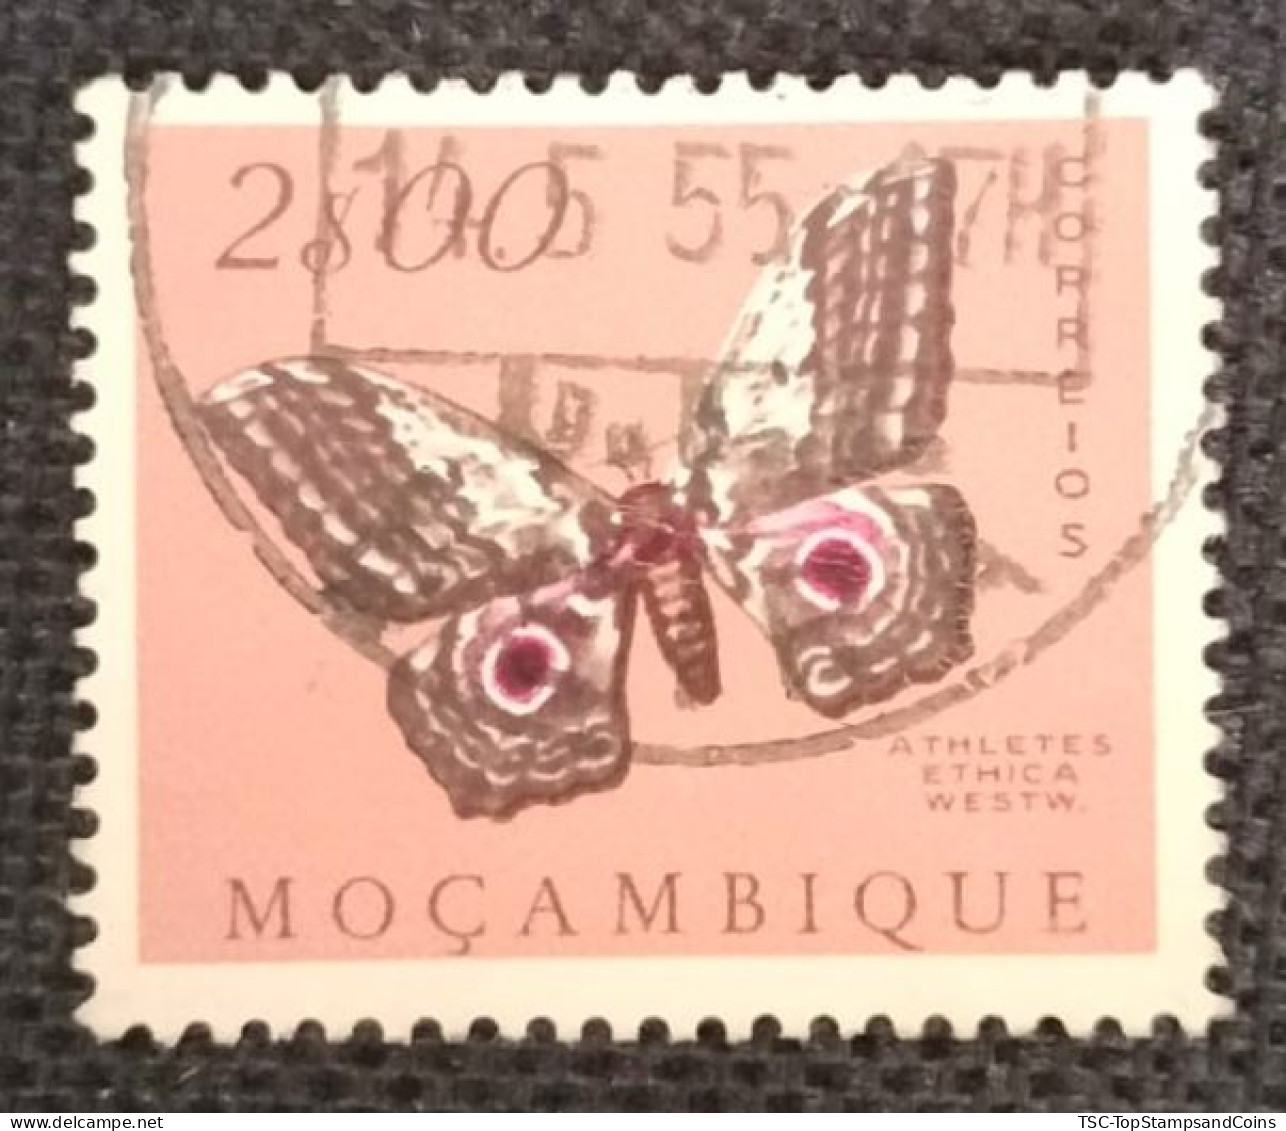 MOZPO0397UD - Mozambique Butterflies  - 2$00 Used Stamp - Mozambique - 1953 - Mozambique